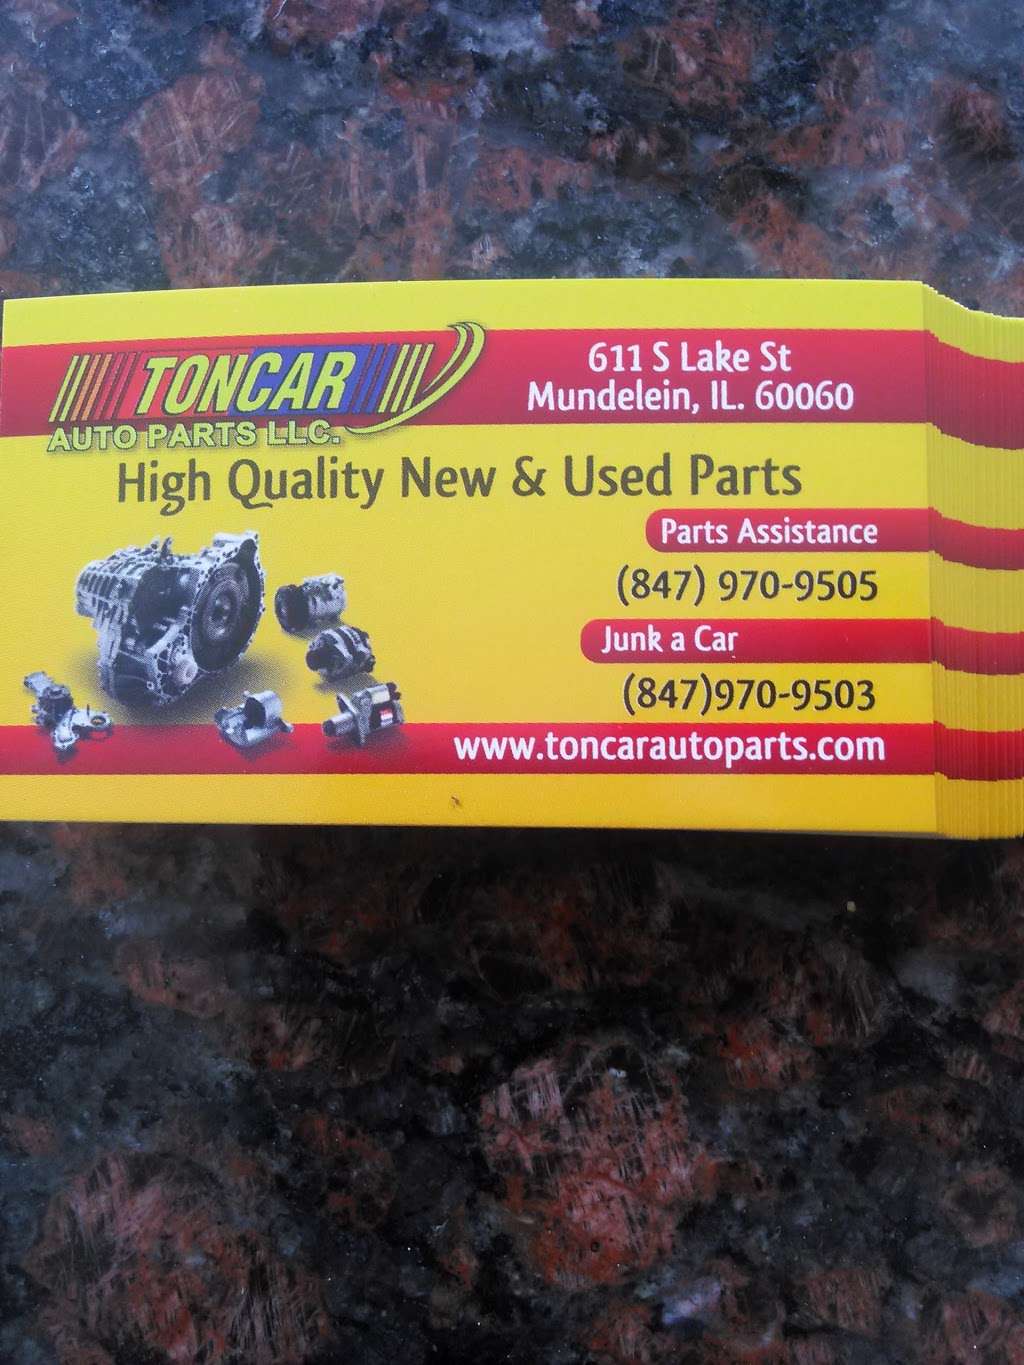 Toncar Auto Parts LLC | 611 S Lake St, Mundelein, IL 60060 | Phone: (847) 970-9505